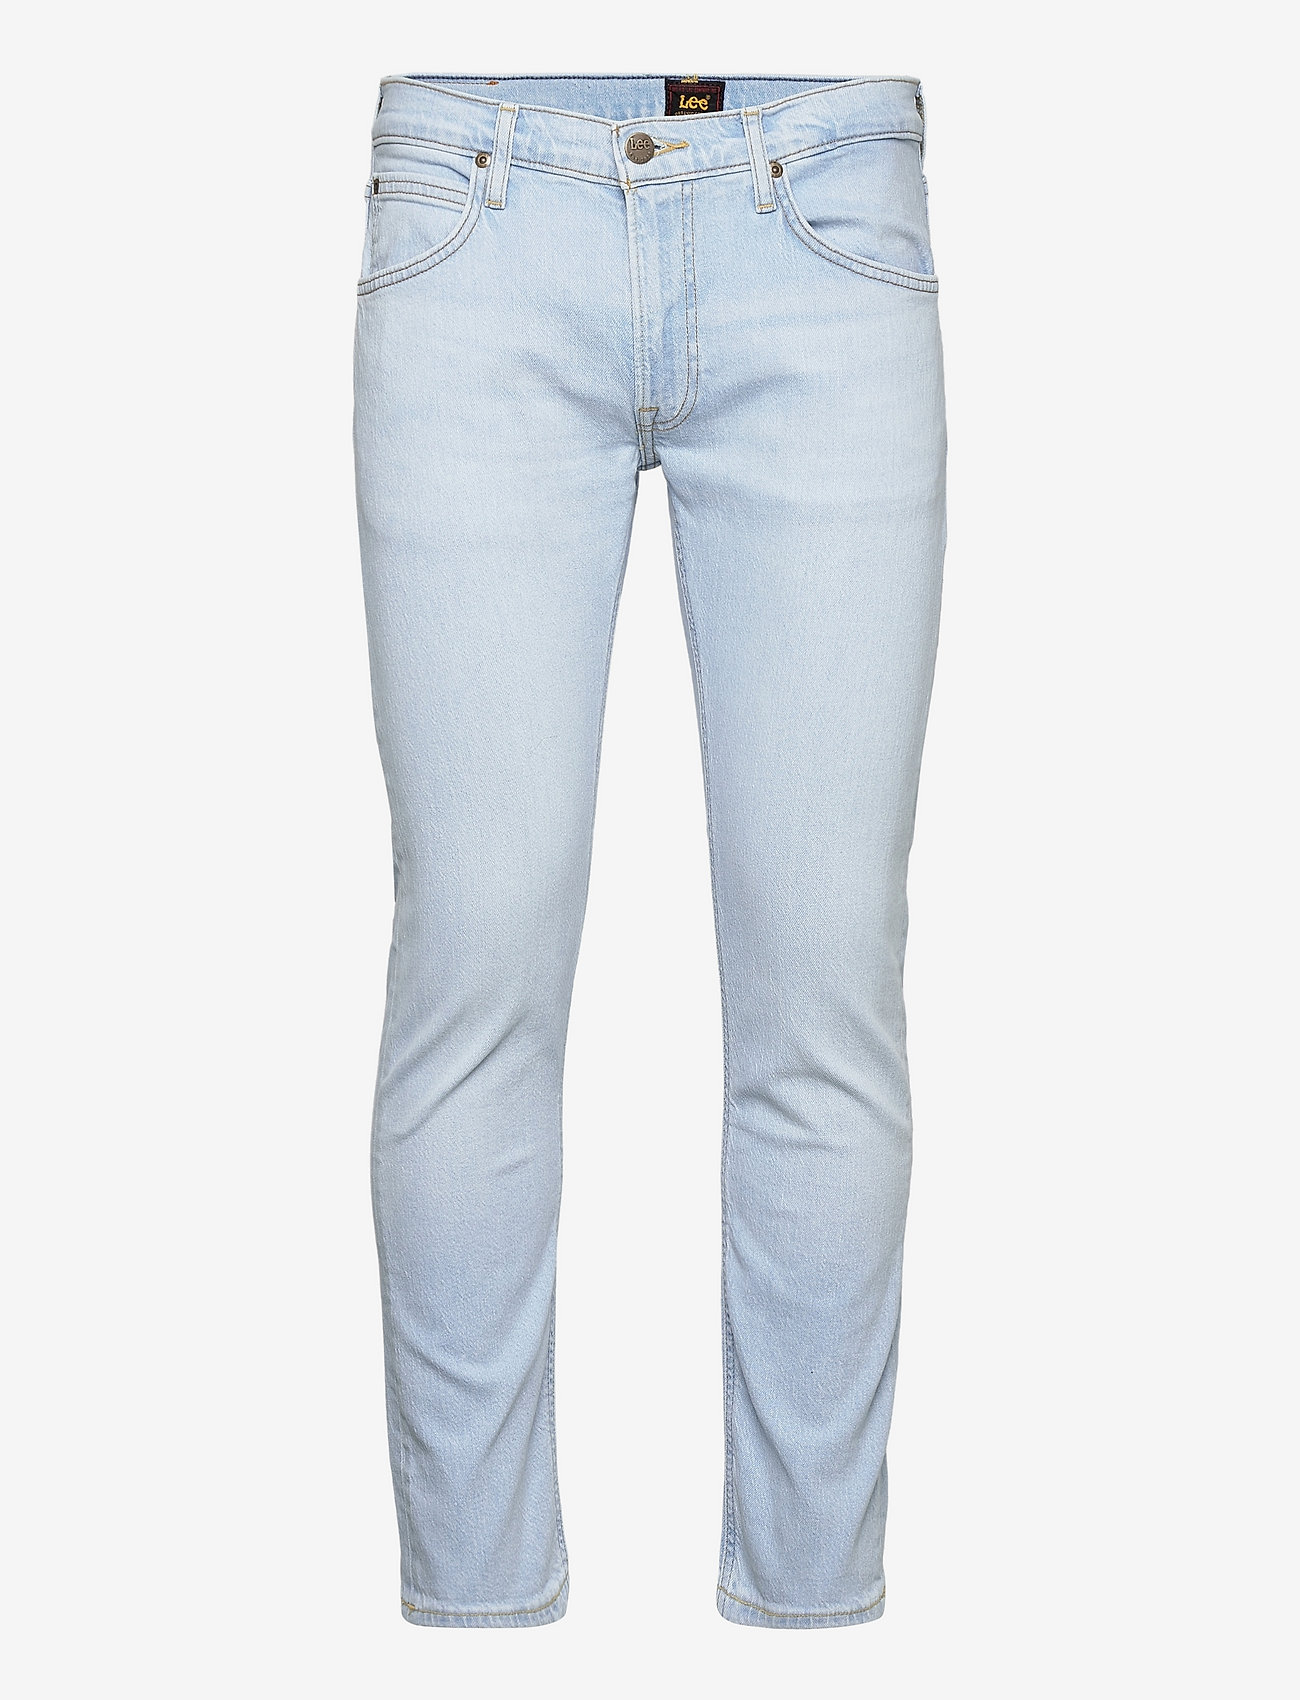 Lee Jeans - LUKE - tapered jeans - light alton - 0